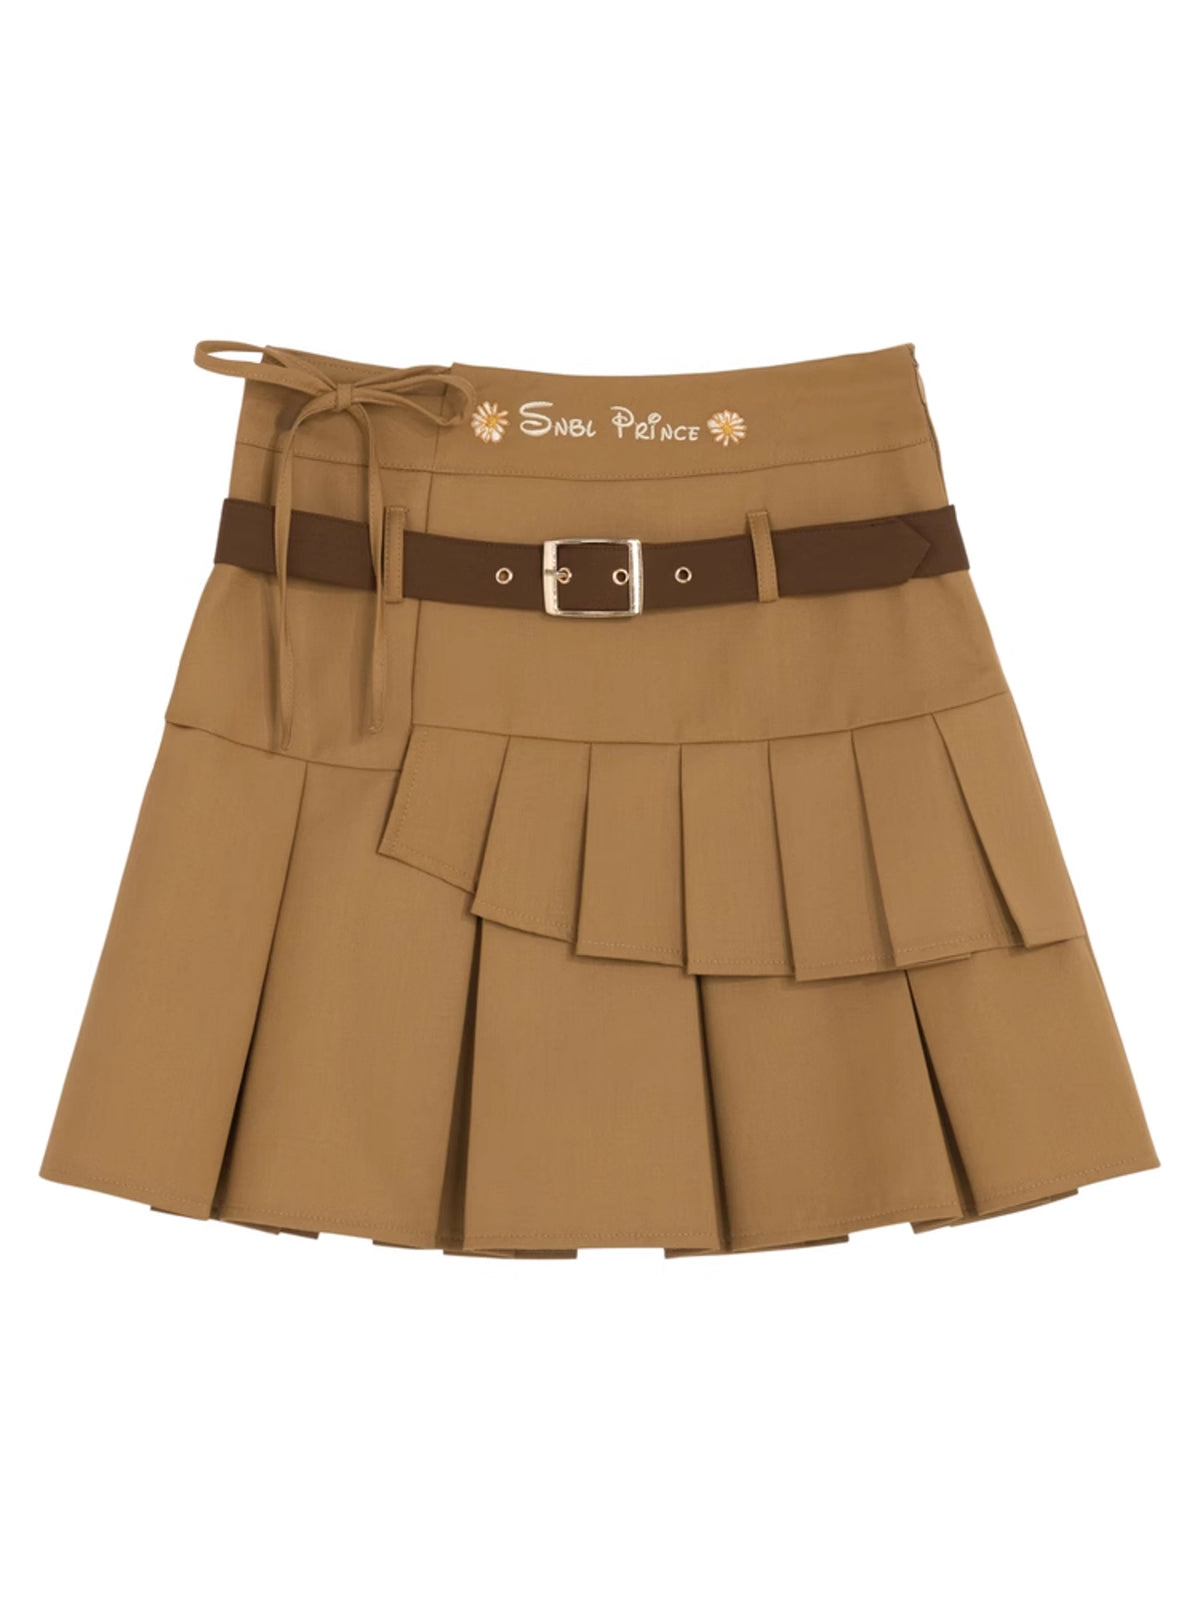 Maillard Vintage American High Waist A-line Skirt-ntbhshop